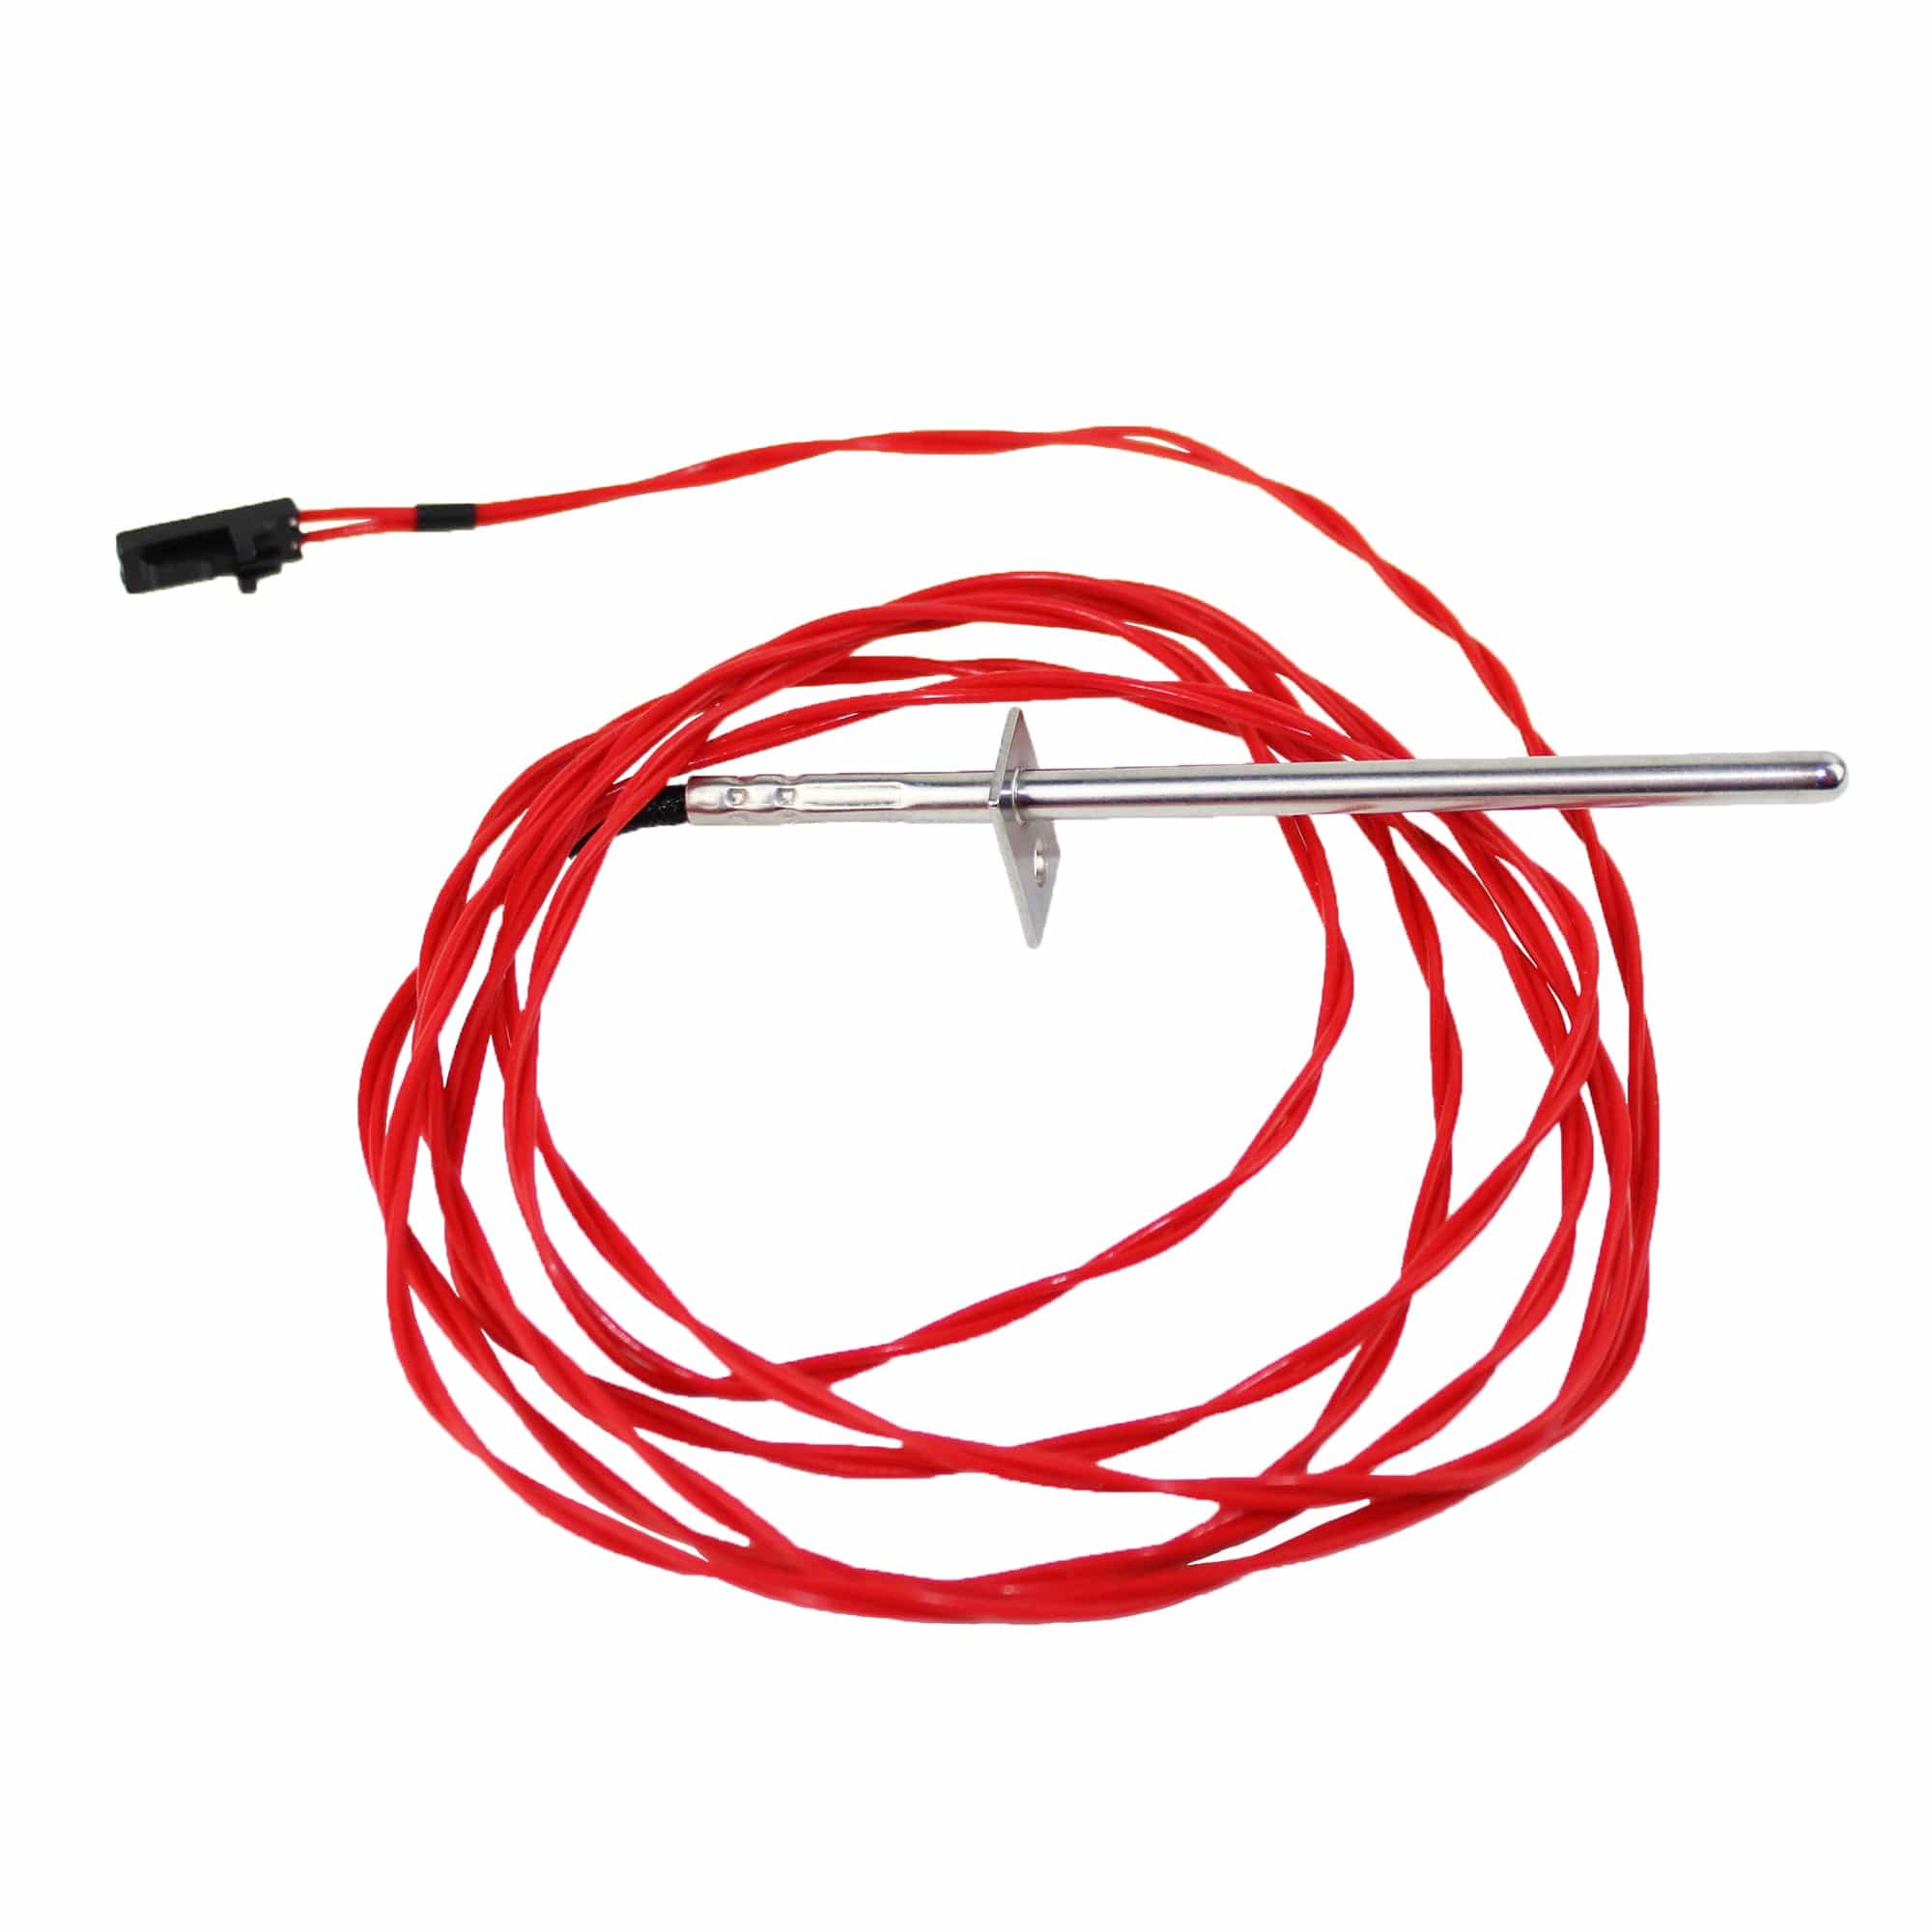 NBK 20087 ESP Thermistor Probe Sensor (Red) Replaces Harman 3-20-00844